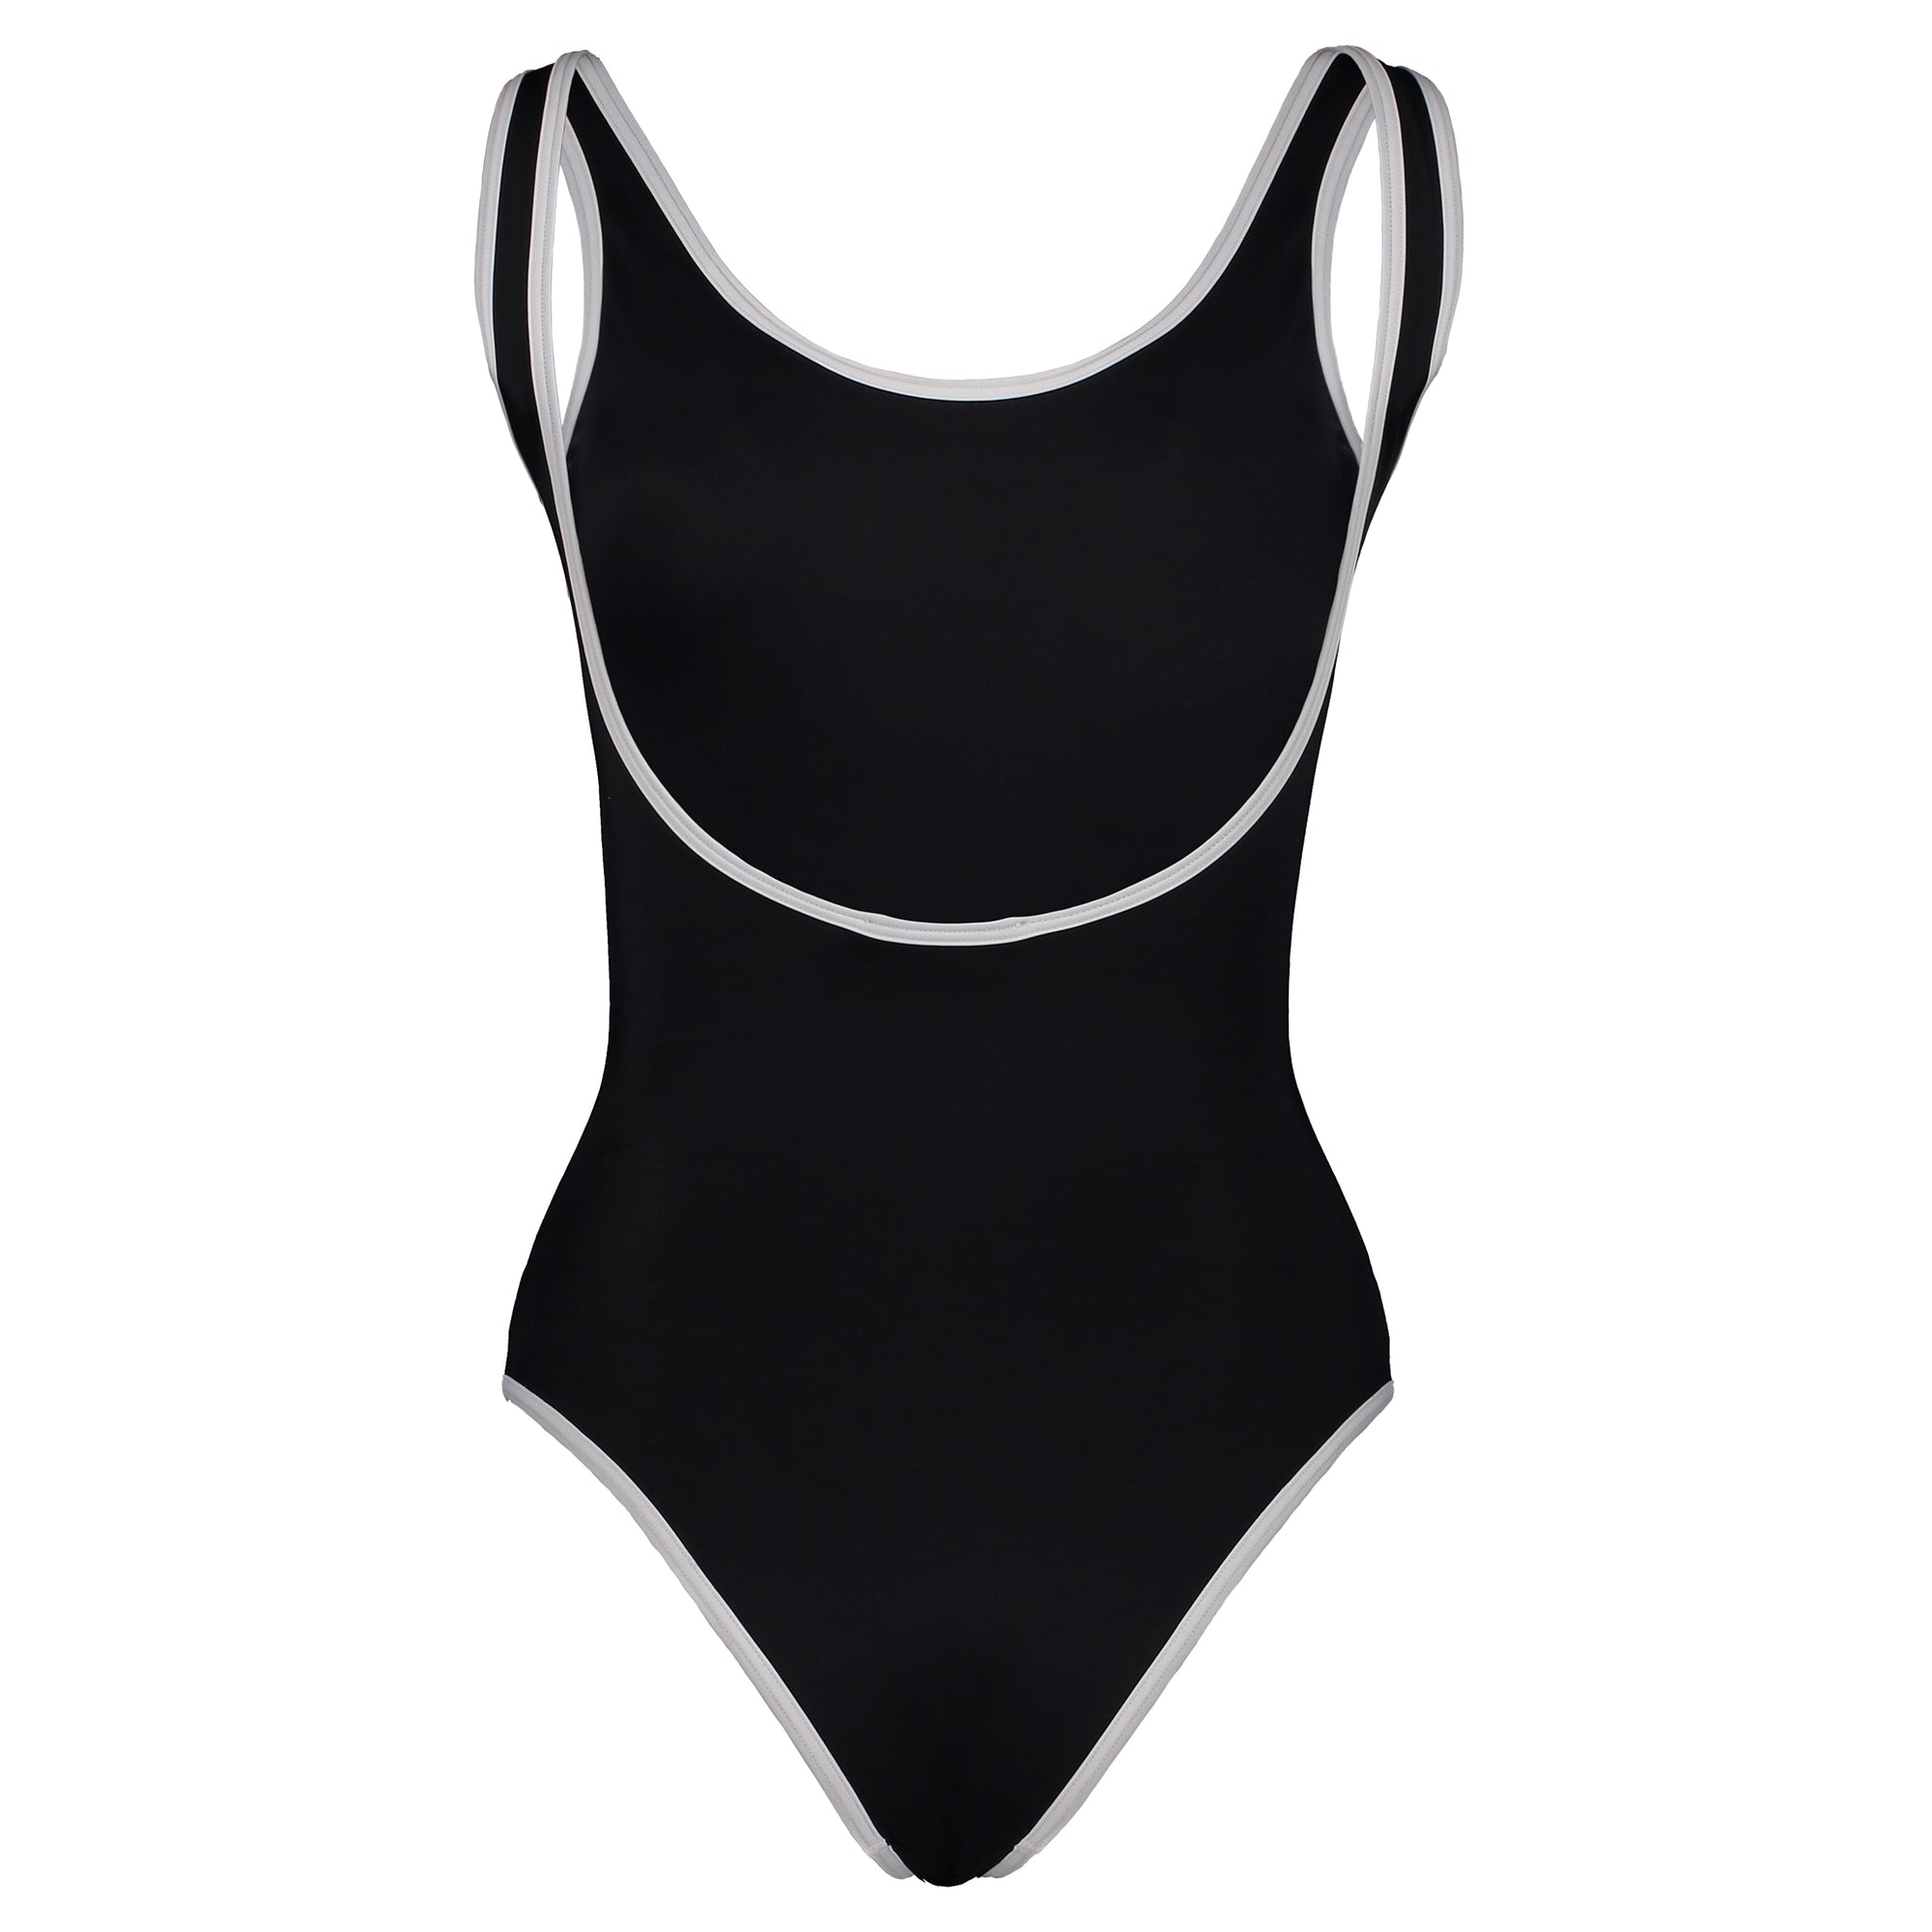 Balmain Swimsuit featuring logo print contrasting edges